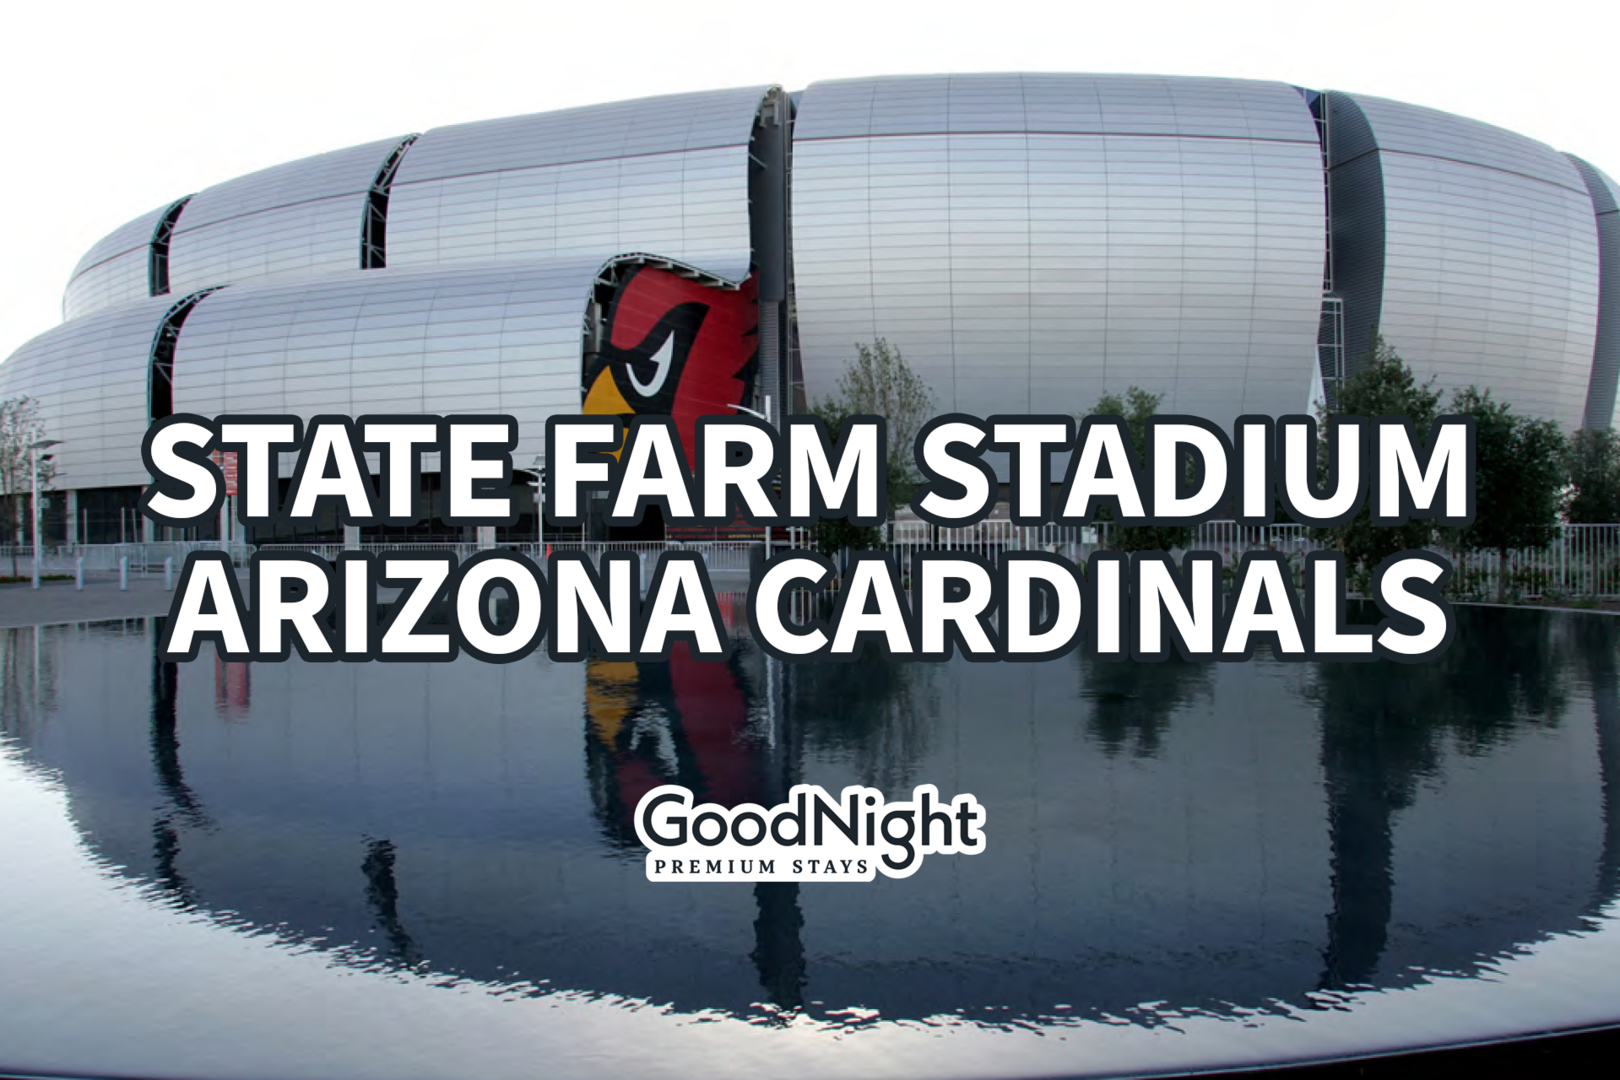 26 minutes to State Farm Stadium - Home to AZ Cardinals